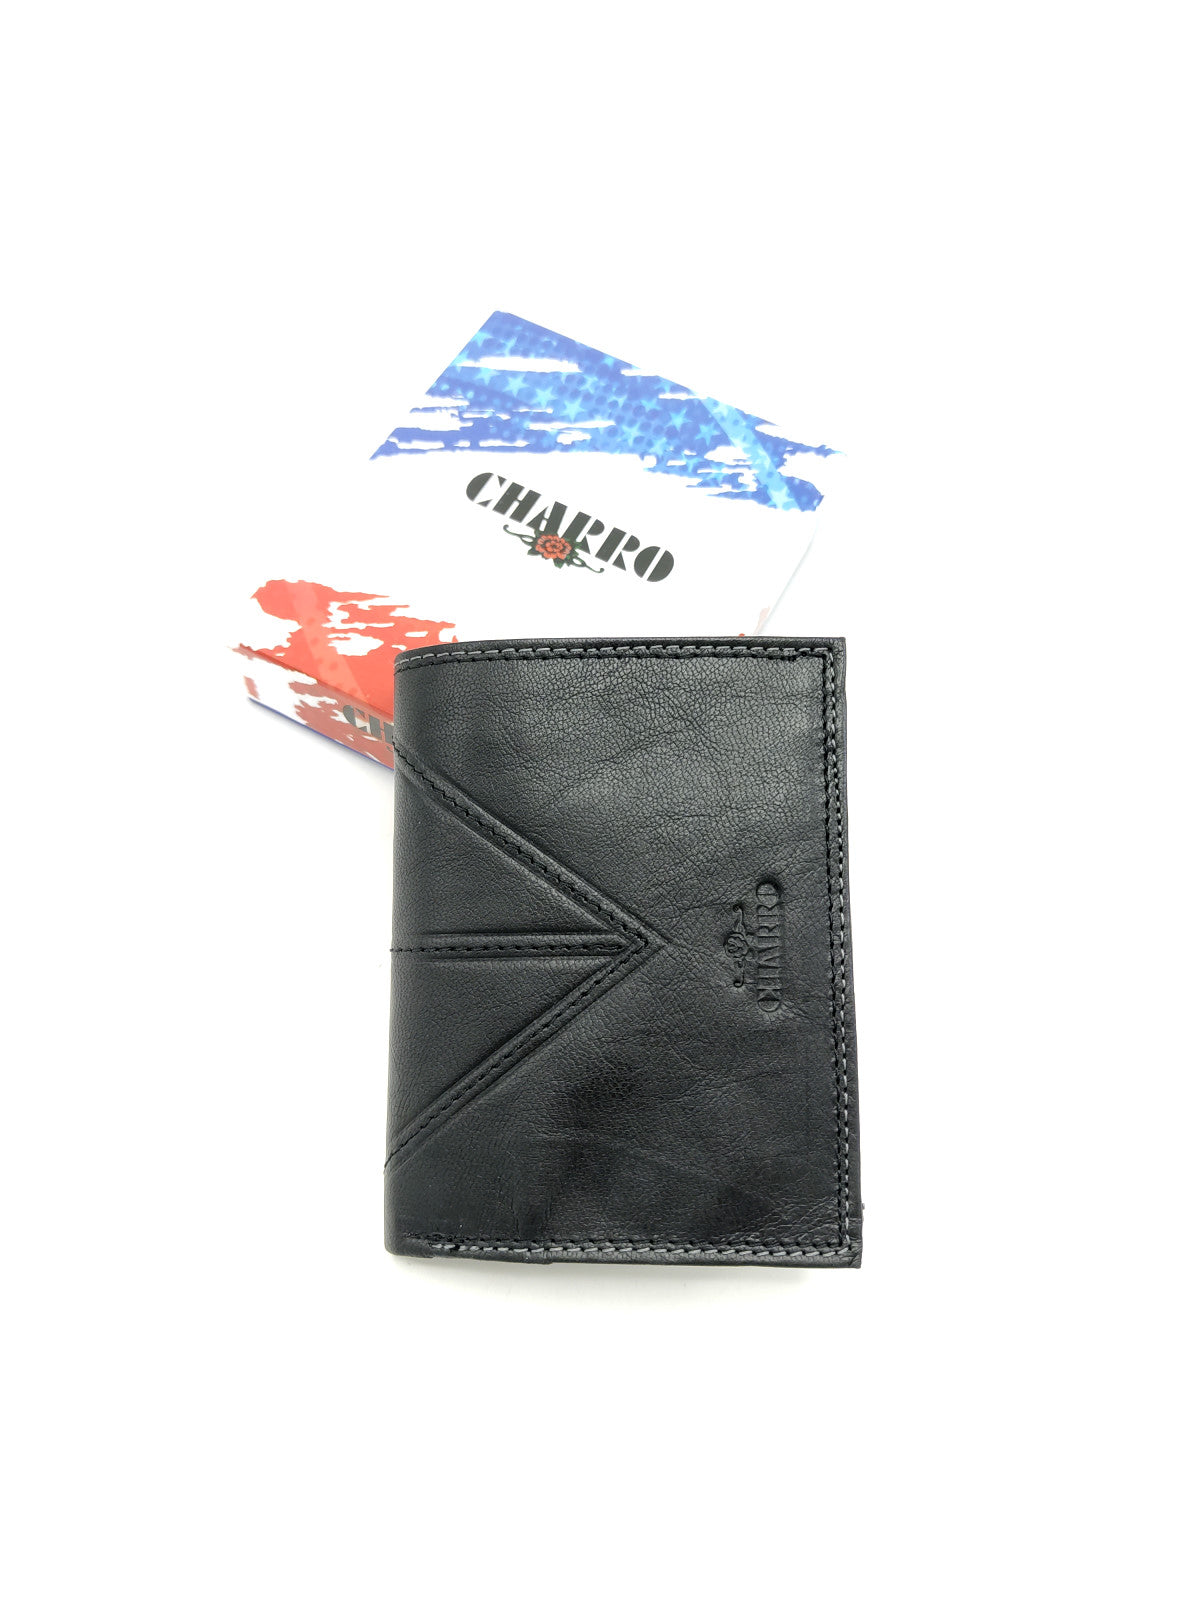 Genuine leather wallet for men, Brand Charro, art. IREC1379.422